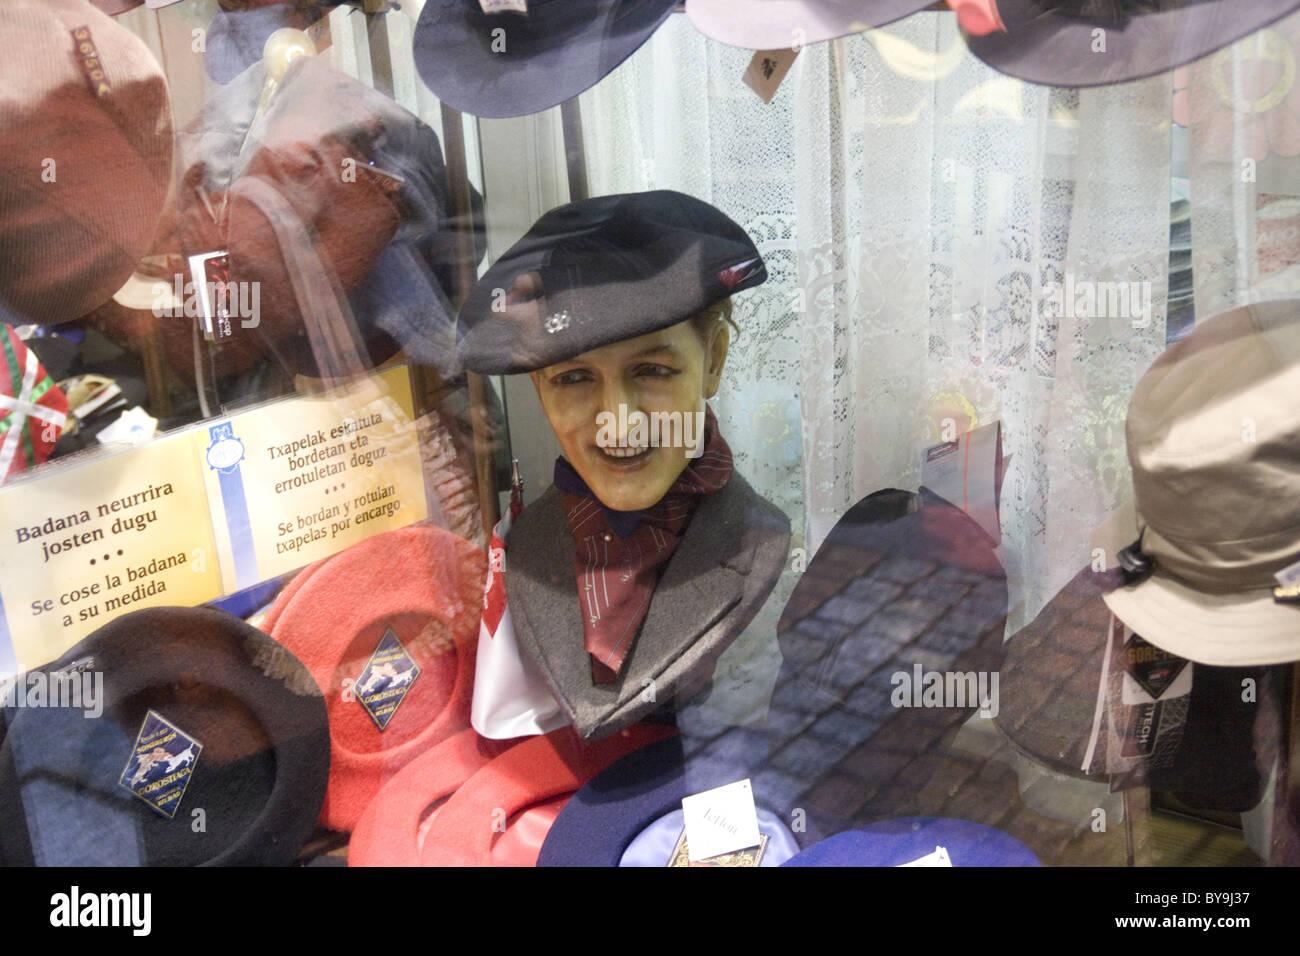 Spain, Bilbao Sombreria Gorostiaga Boina the distinctive Basque beret on  sale in shop window Stock Photo - Alamy